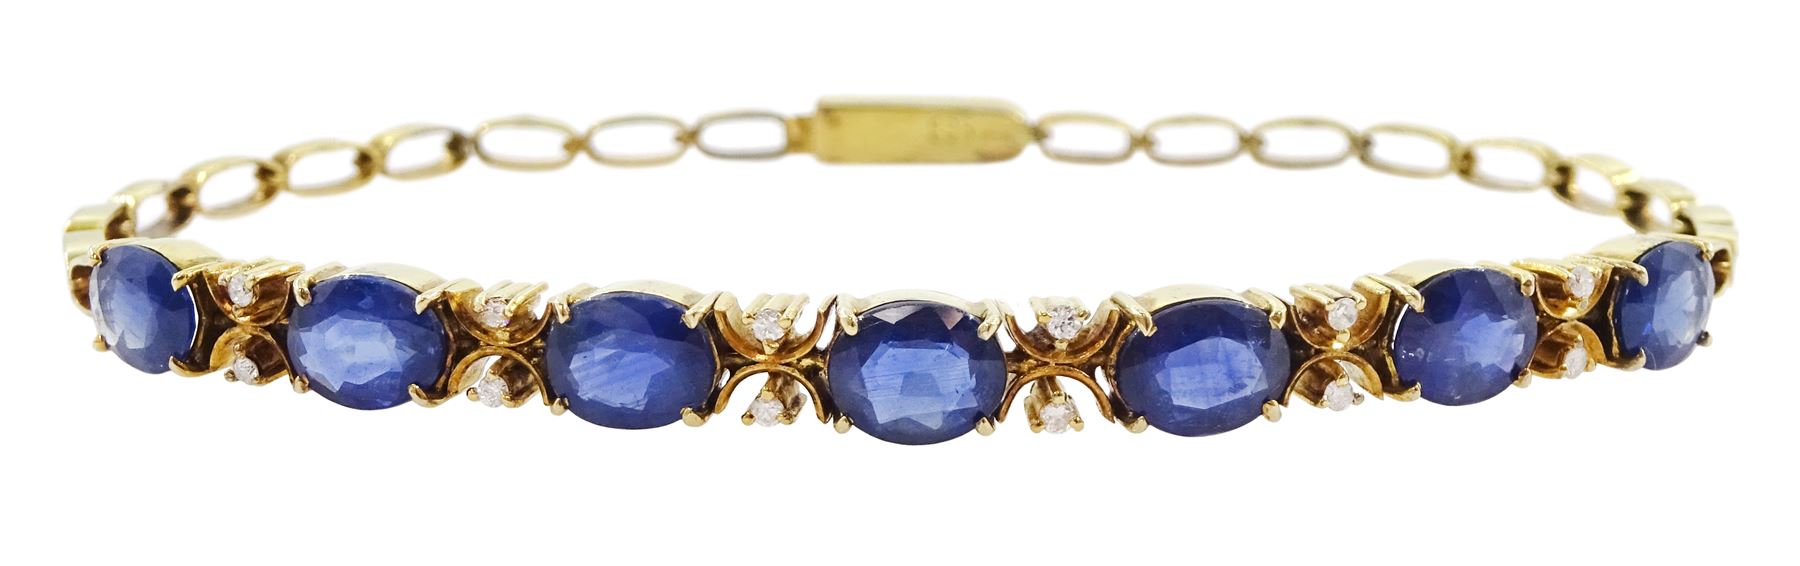 14ct gold oval cut sapphire and round brilliant cut diamond bracelet